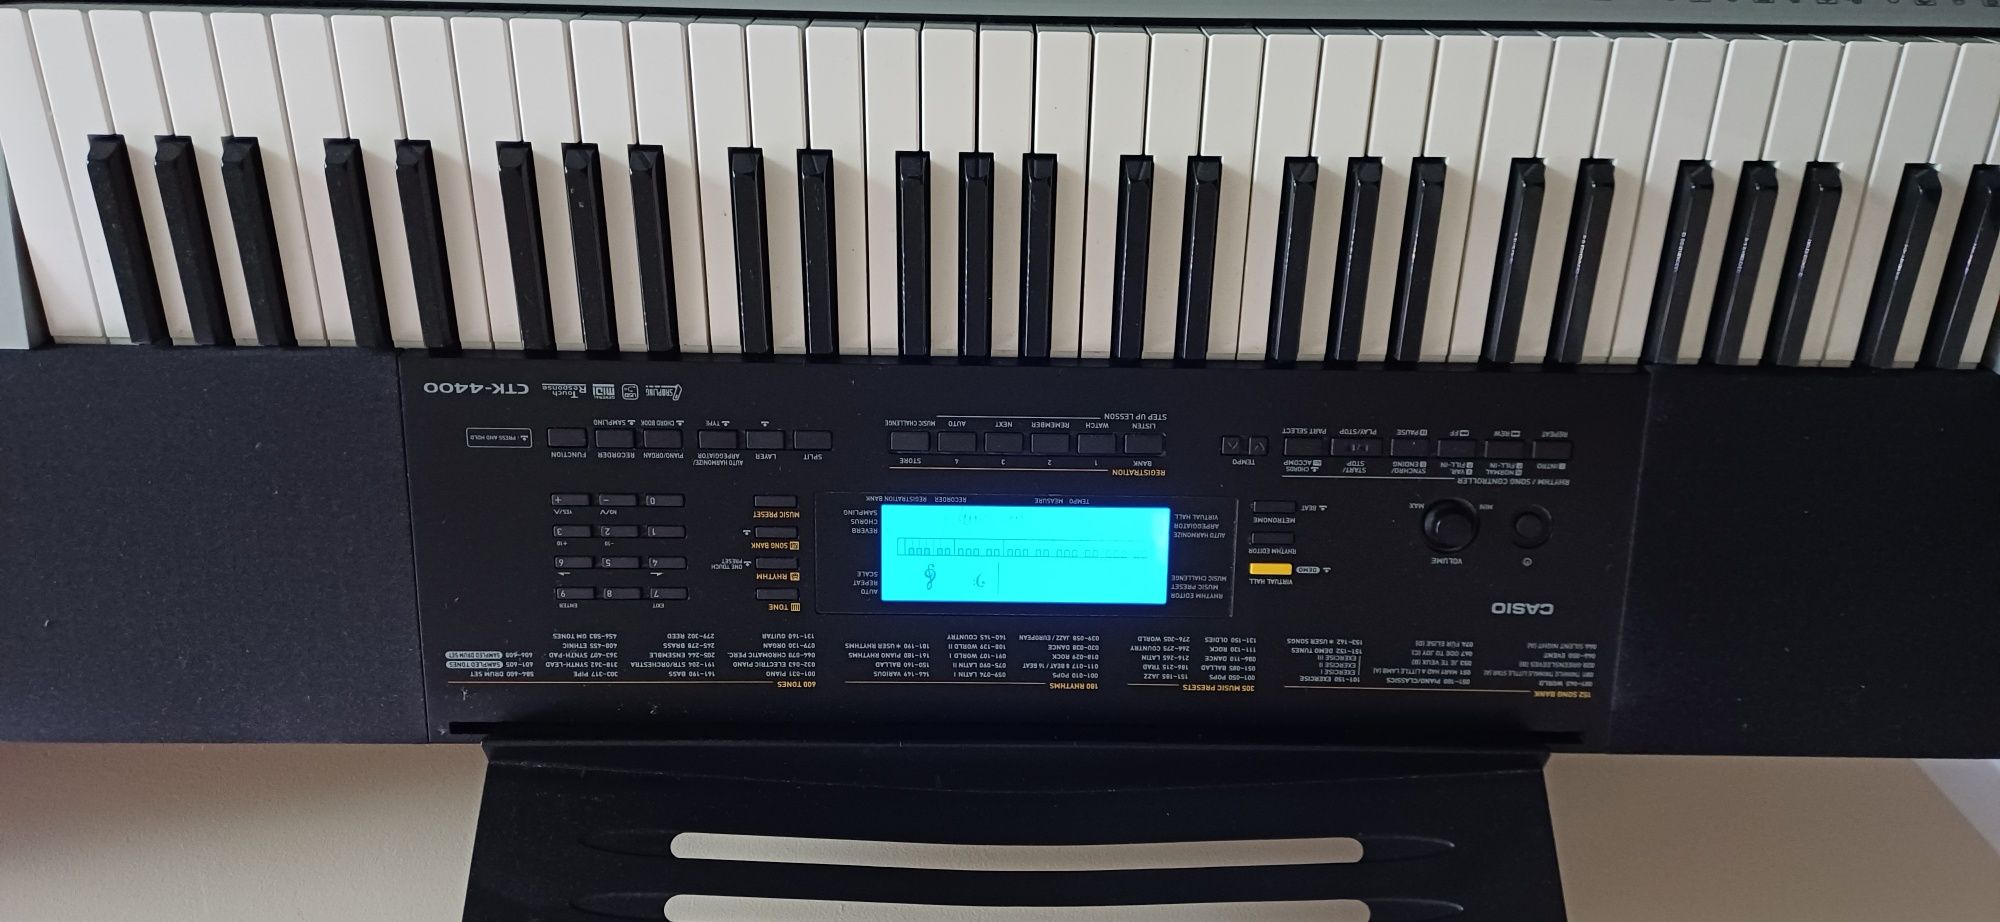 Keyboard Casio CTK-4400